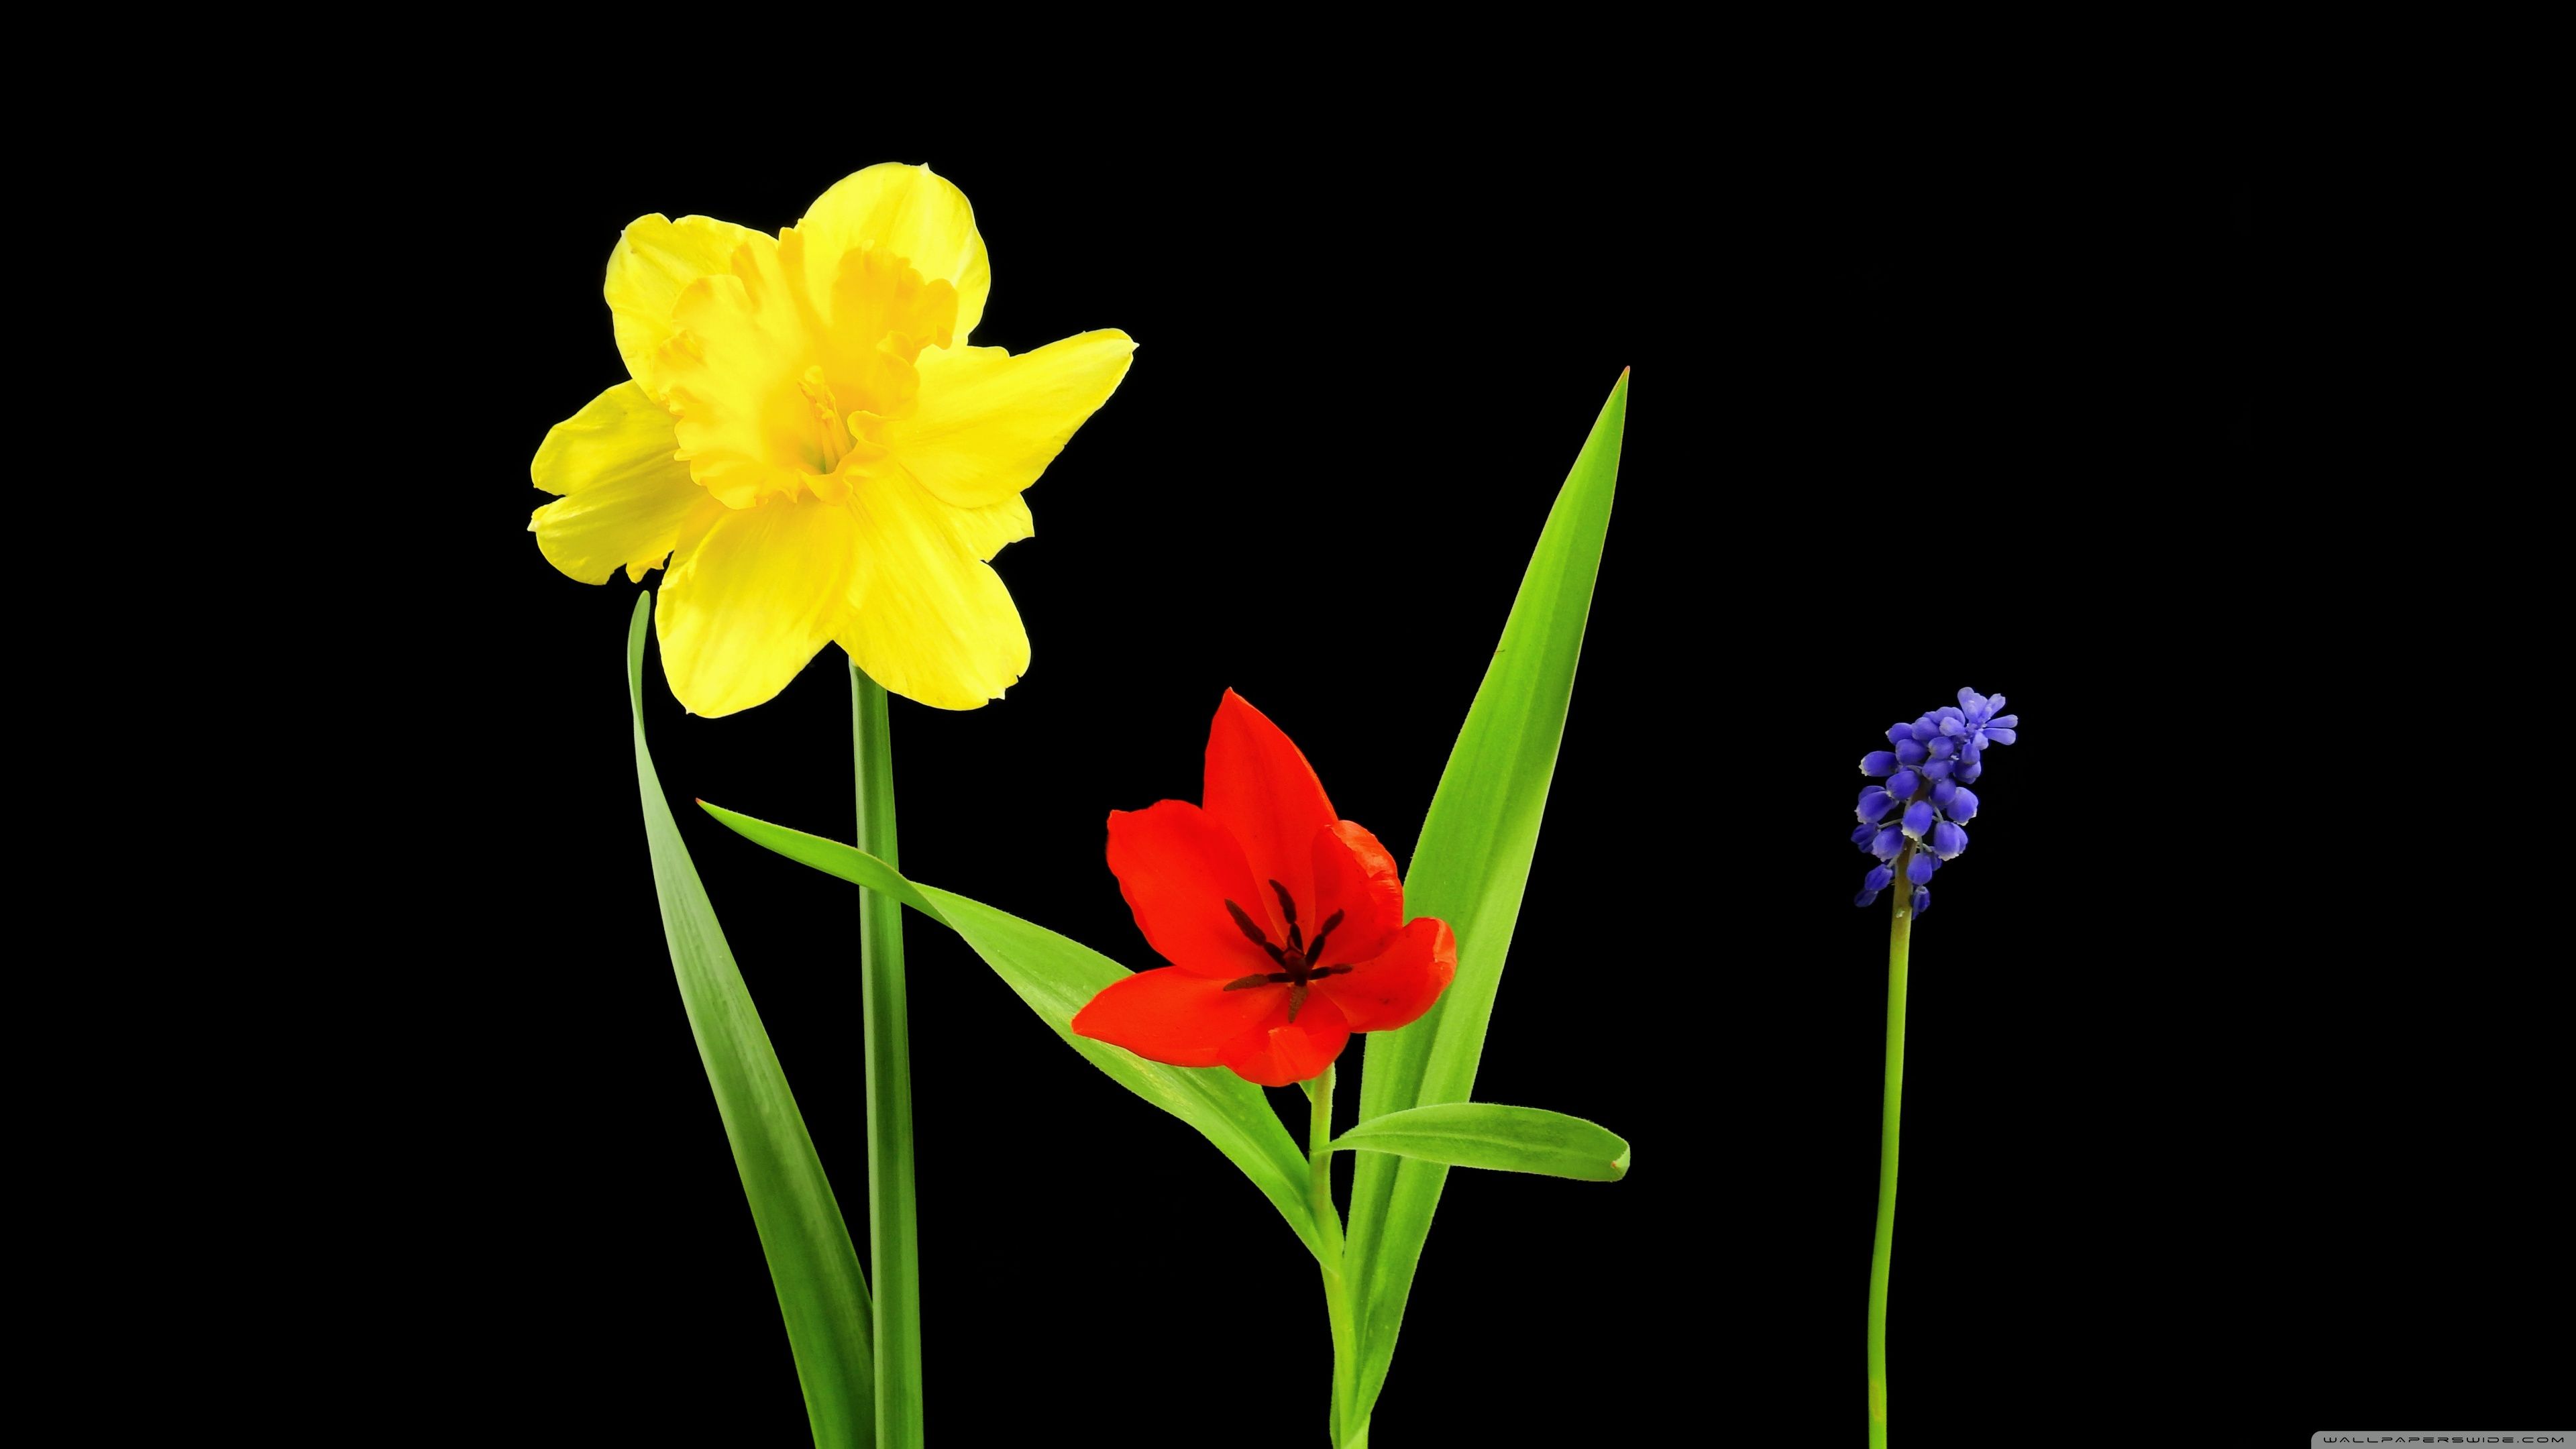 Spring Flowers, Daffodil, Tulip, Muscari, Black Background Ultra